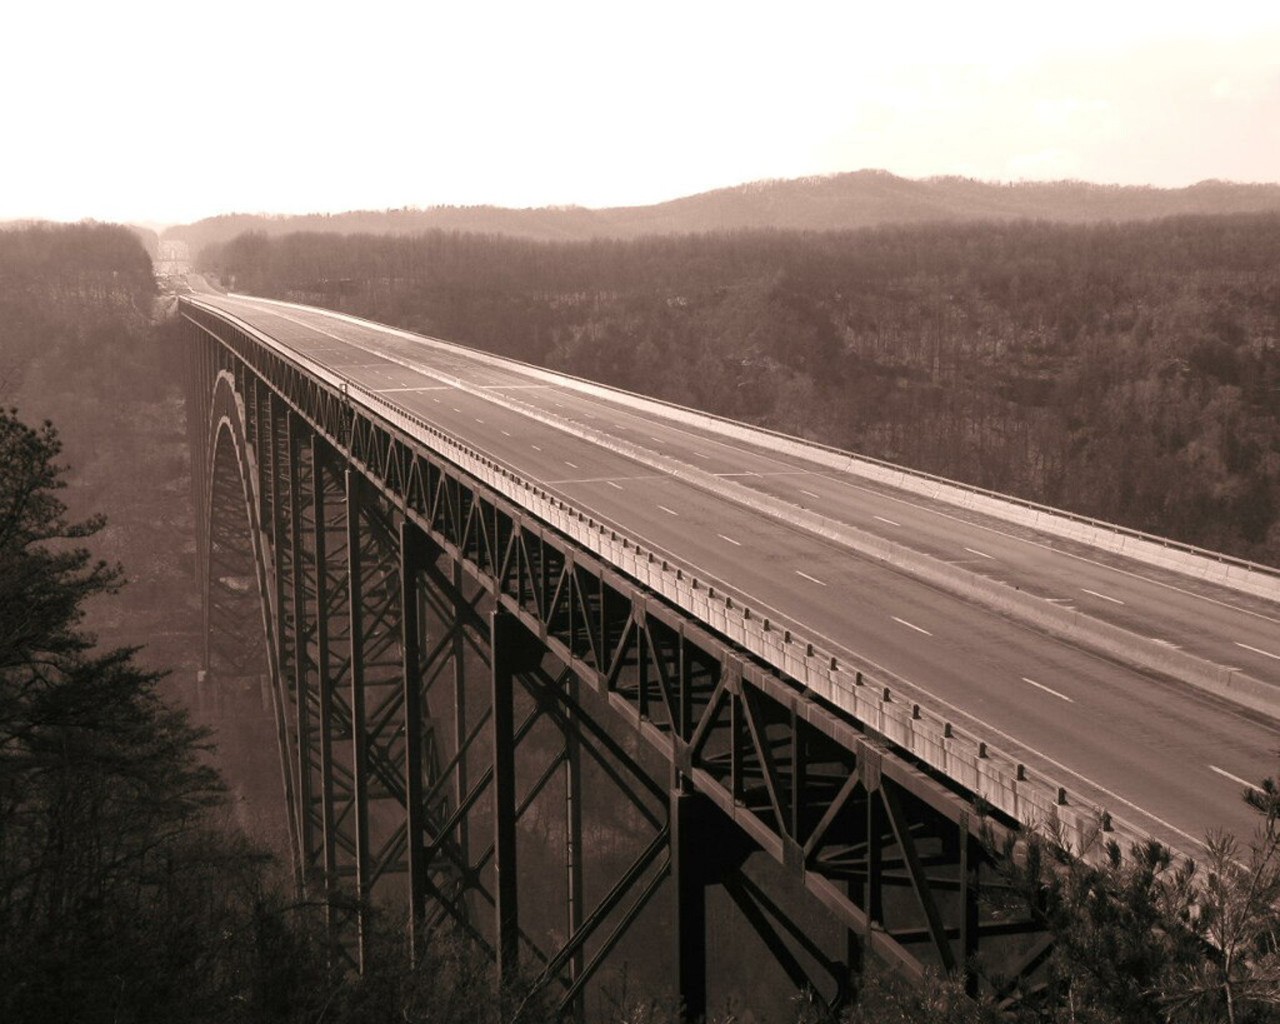 General 1280x1024 bridge viaduct highway road landscape construction outdoors sepia monochrome